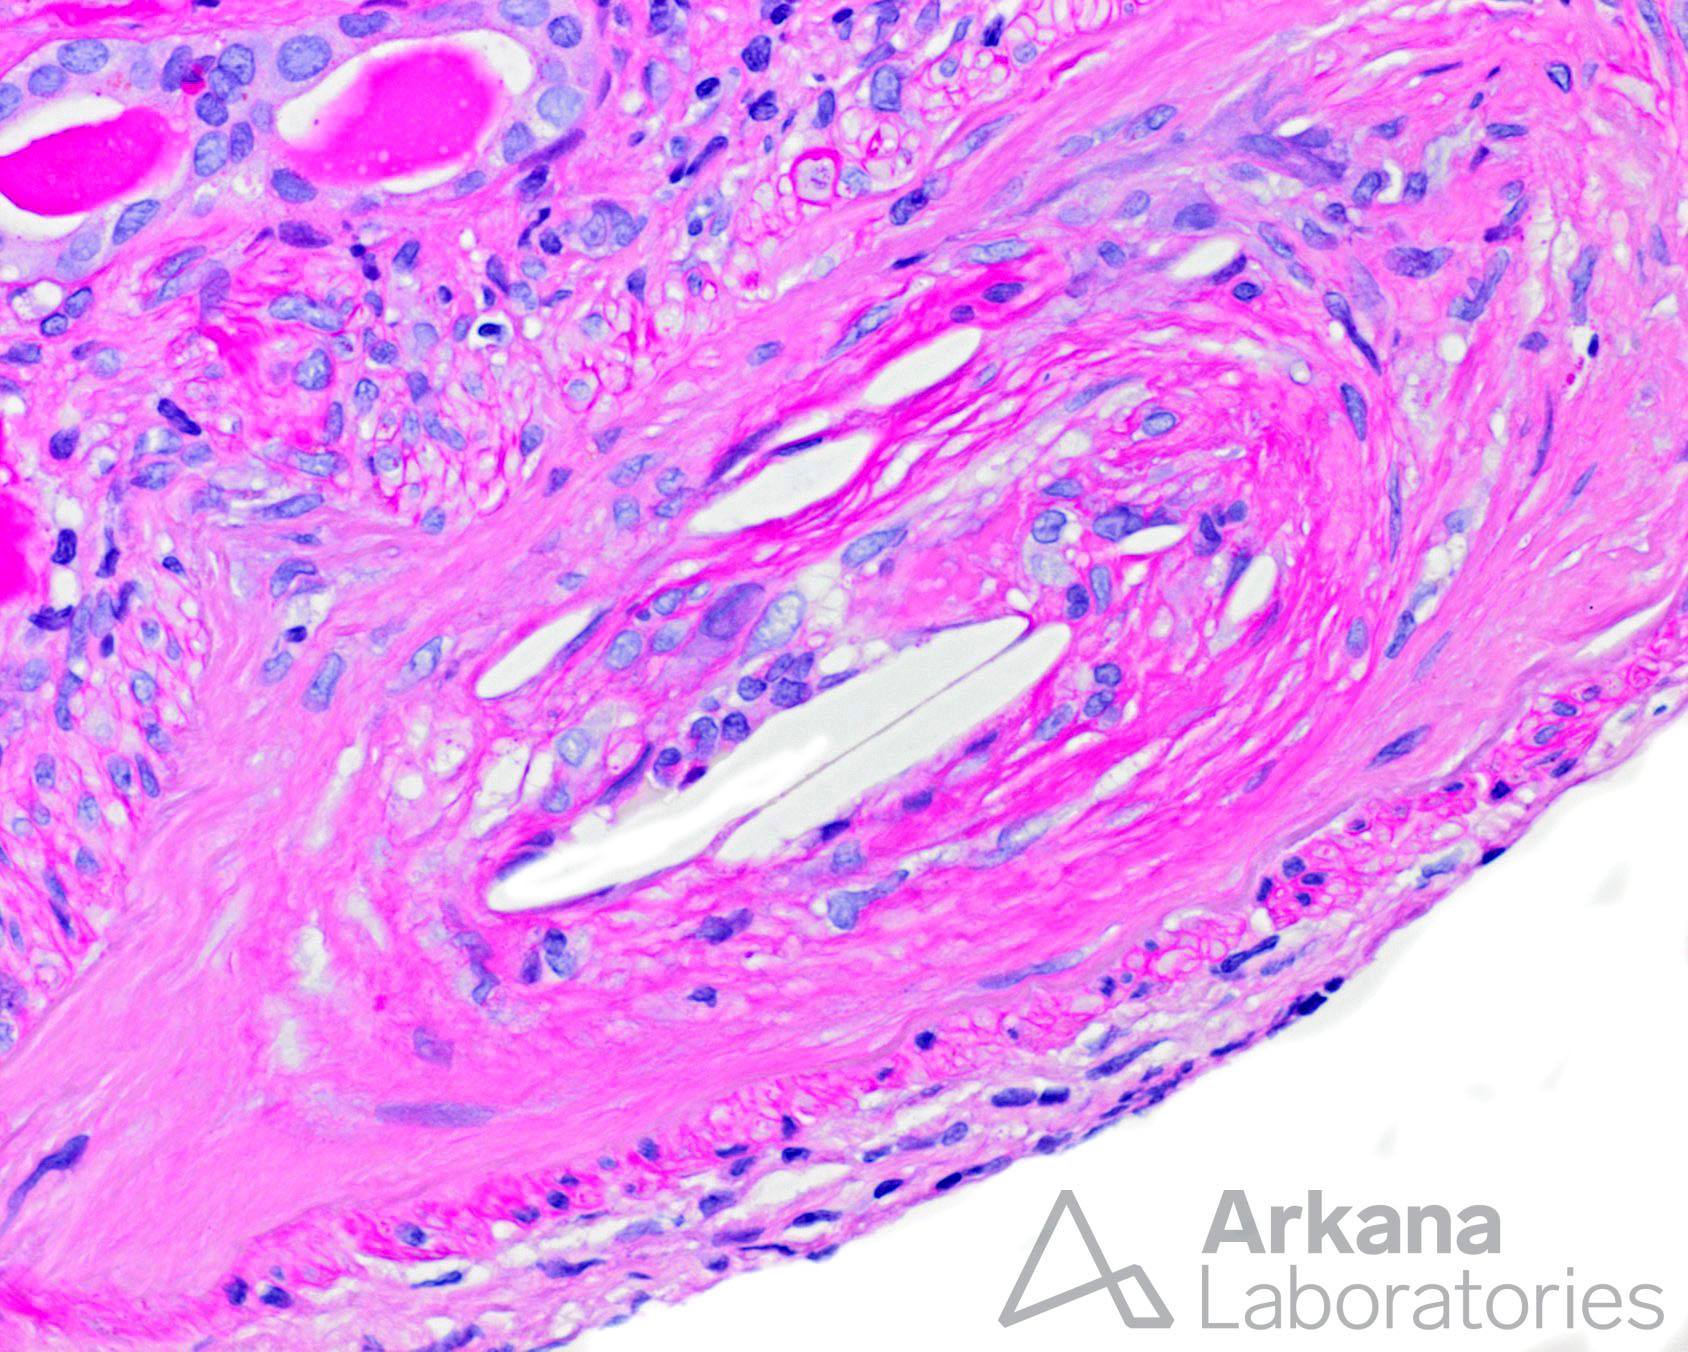 artery with a cholesterol embolus, arkana laboratories, renal pathology, renal disease